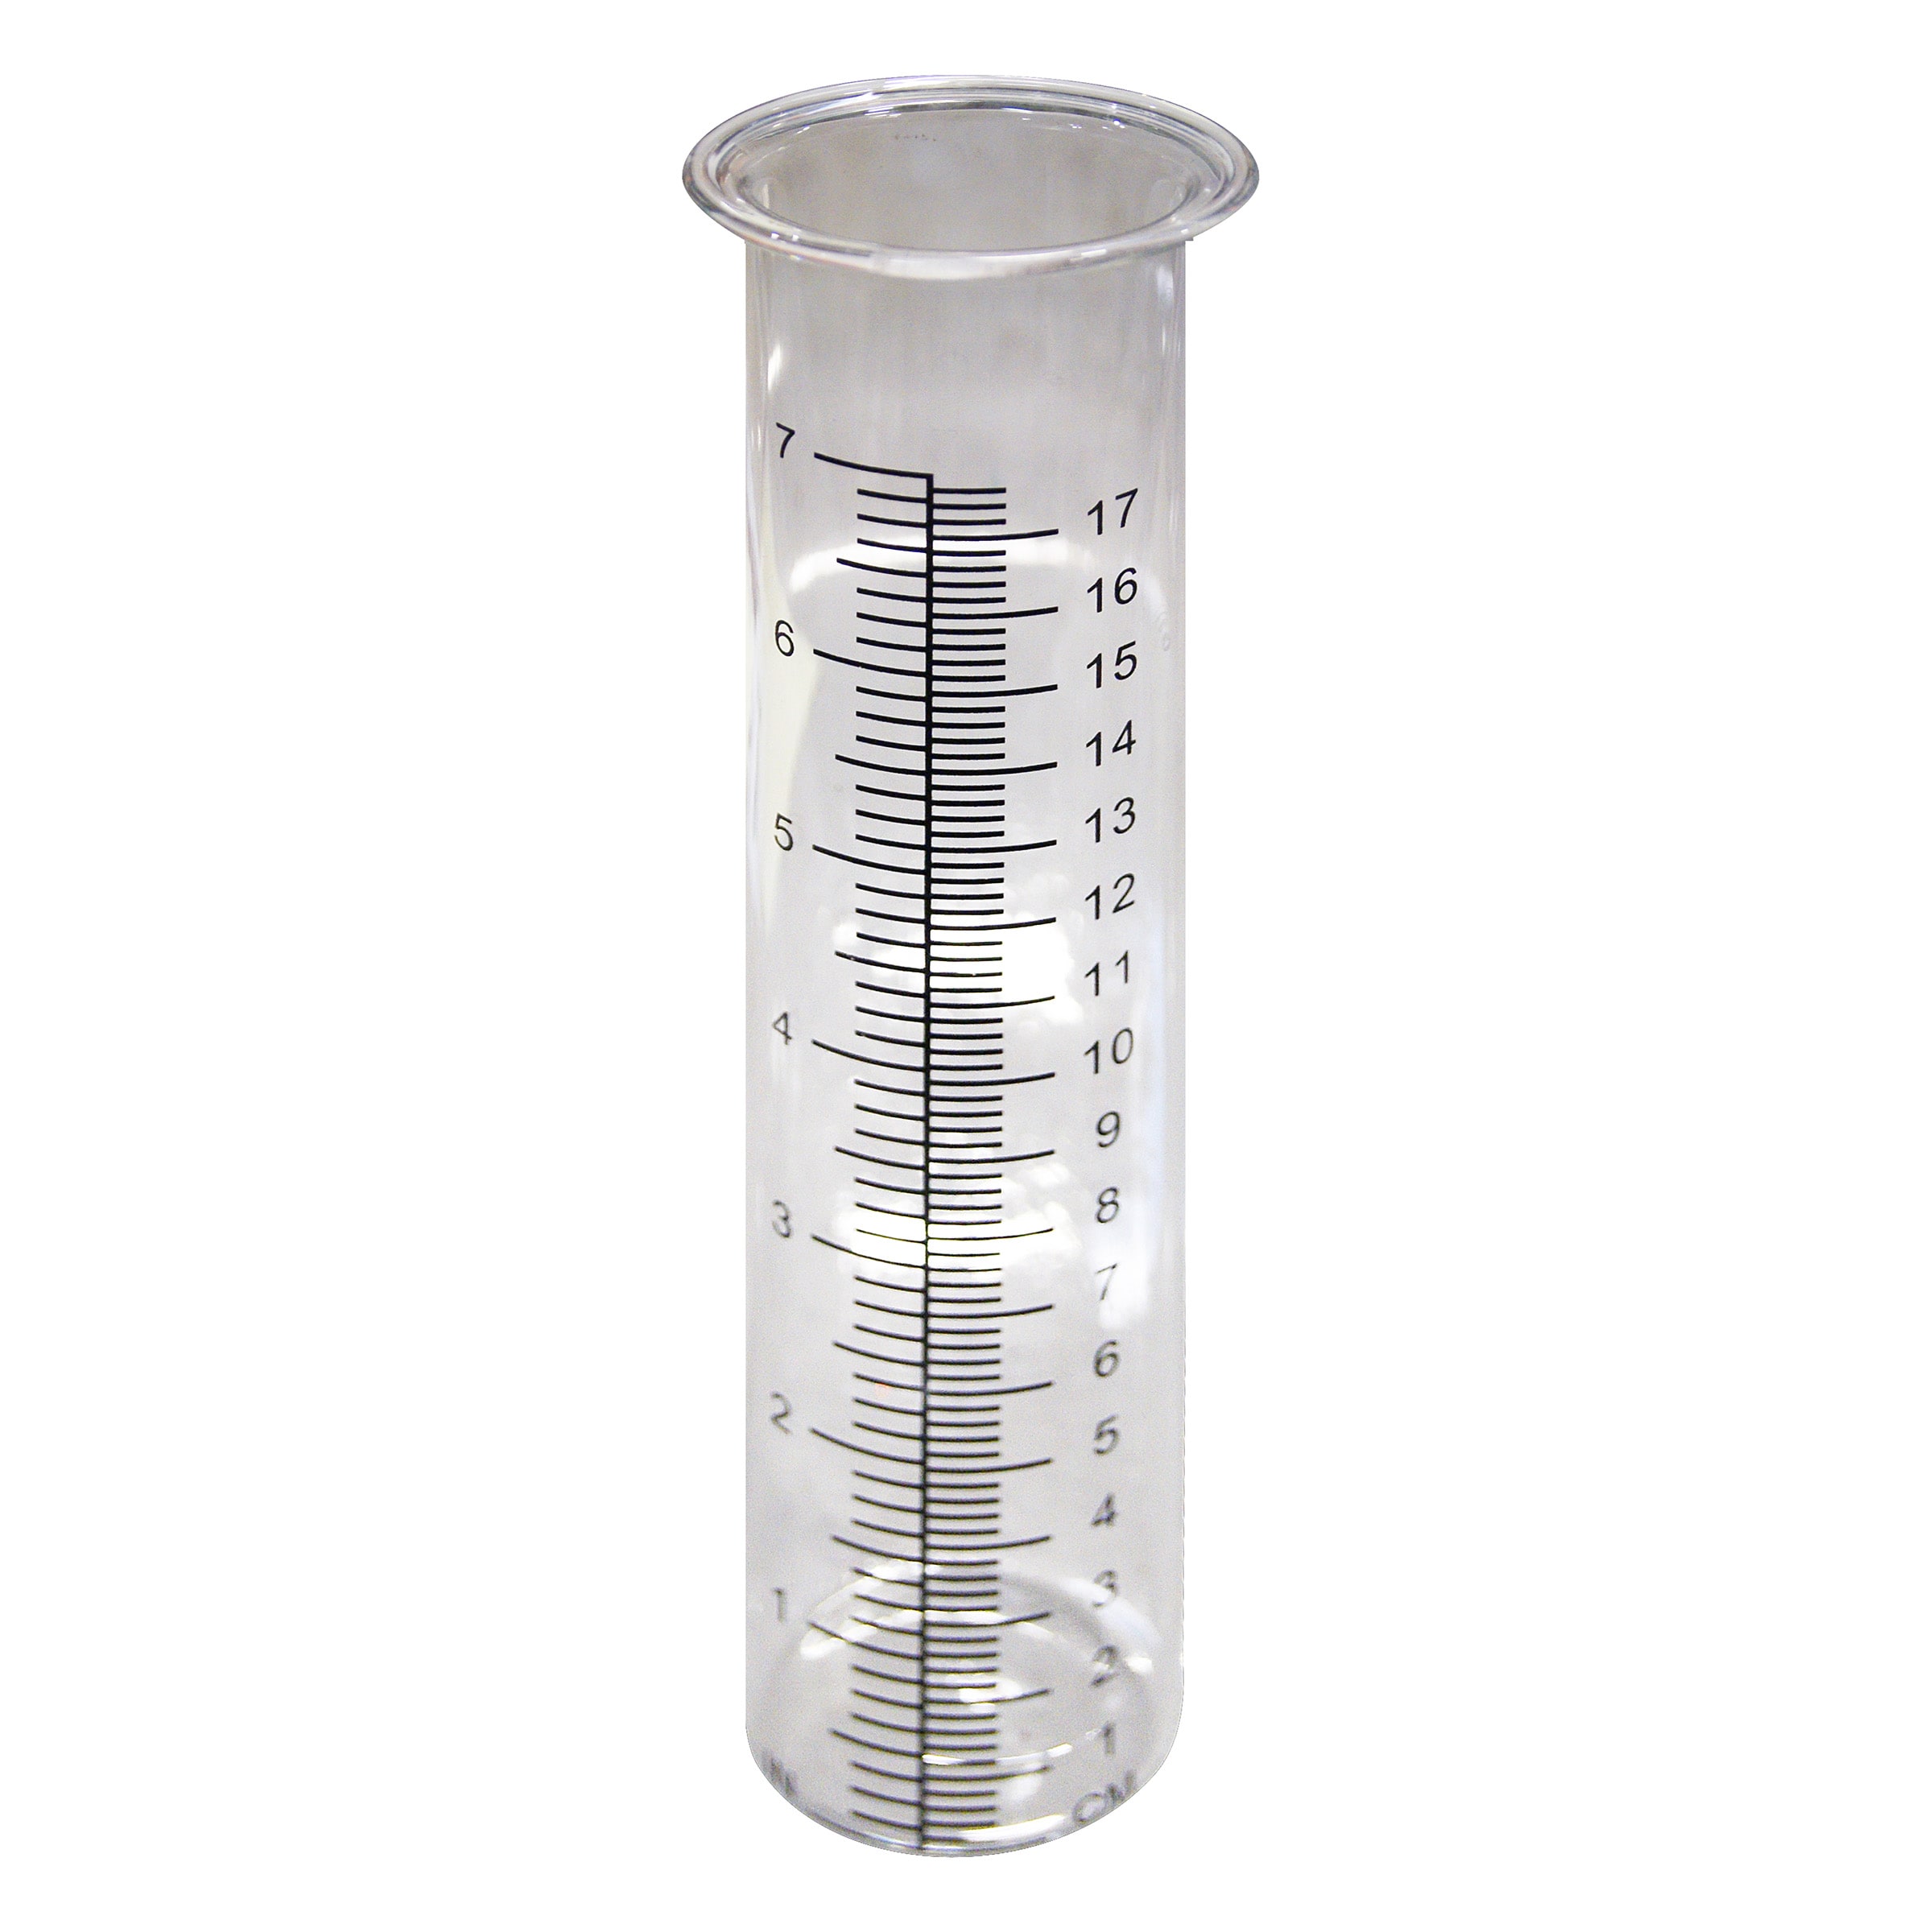 Measuring Glass Rain Water Meter with Mounting Bracket AdirPro Outdoor Rain Gauge Glass Tube Garden Outdoor Décor with 11-Inch Capacity Black 